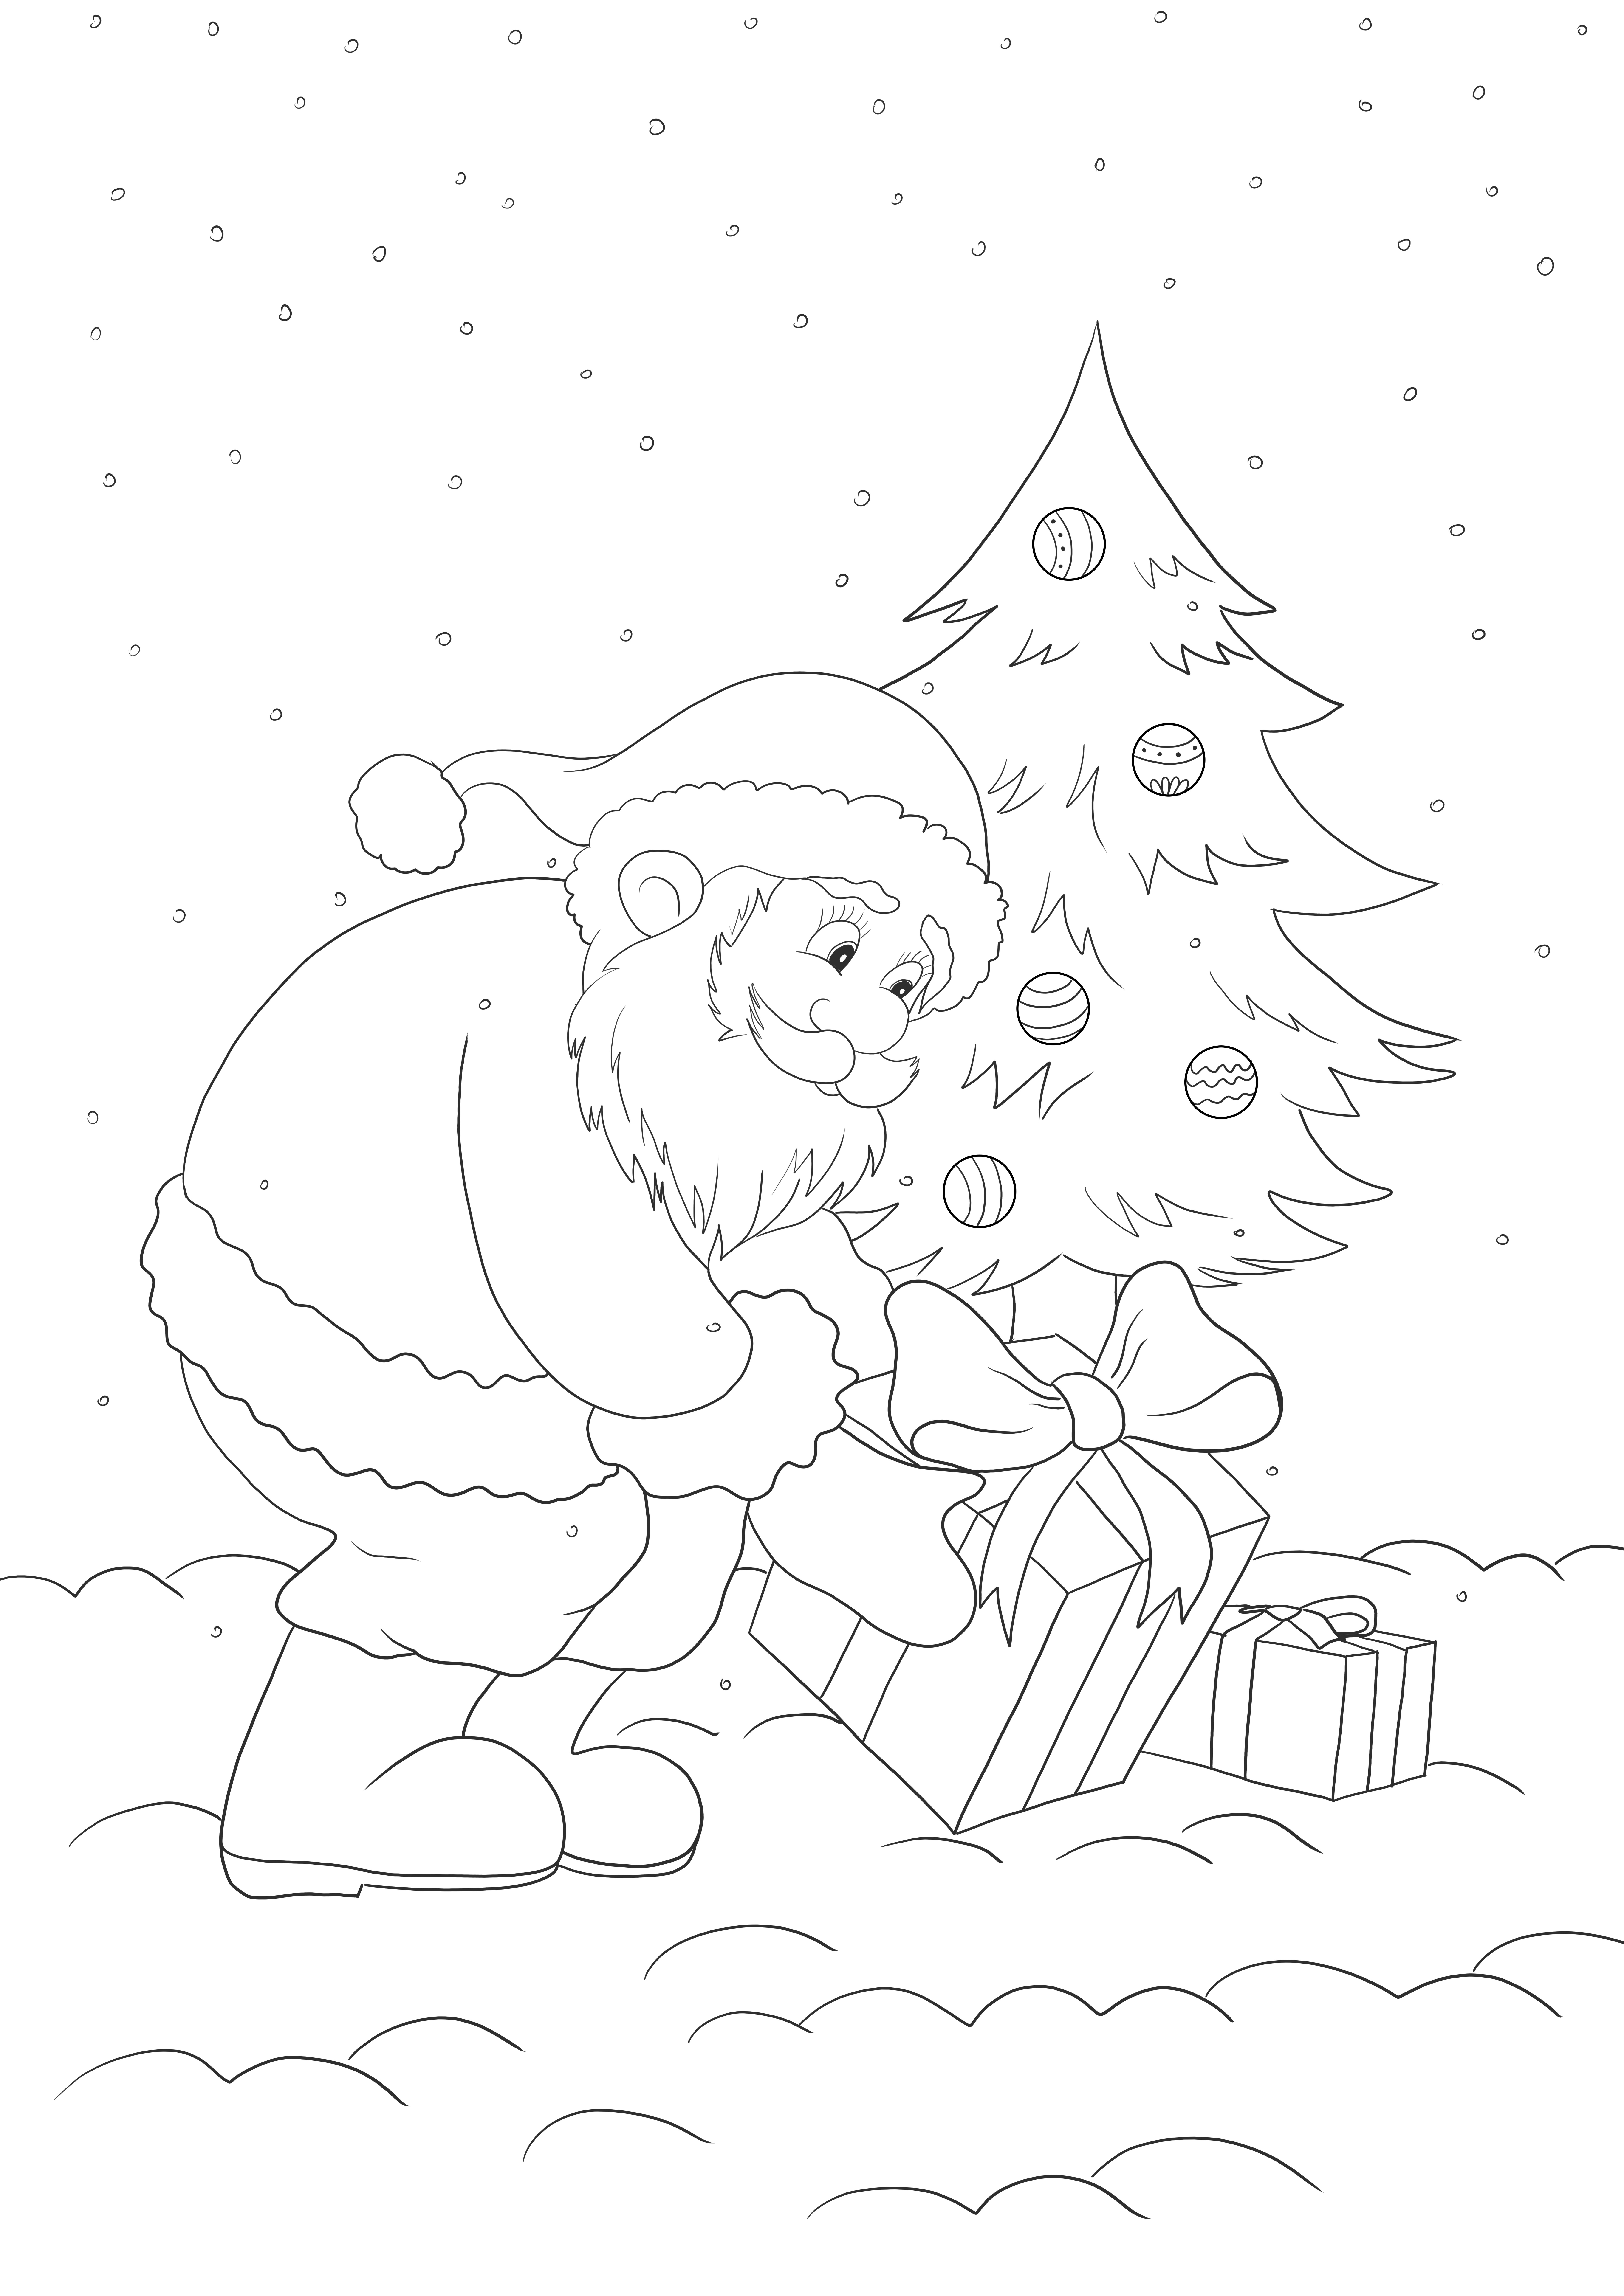 Santa Claus and Christmas presents coloring and free printing image